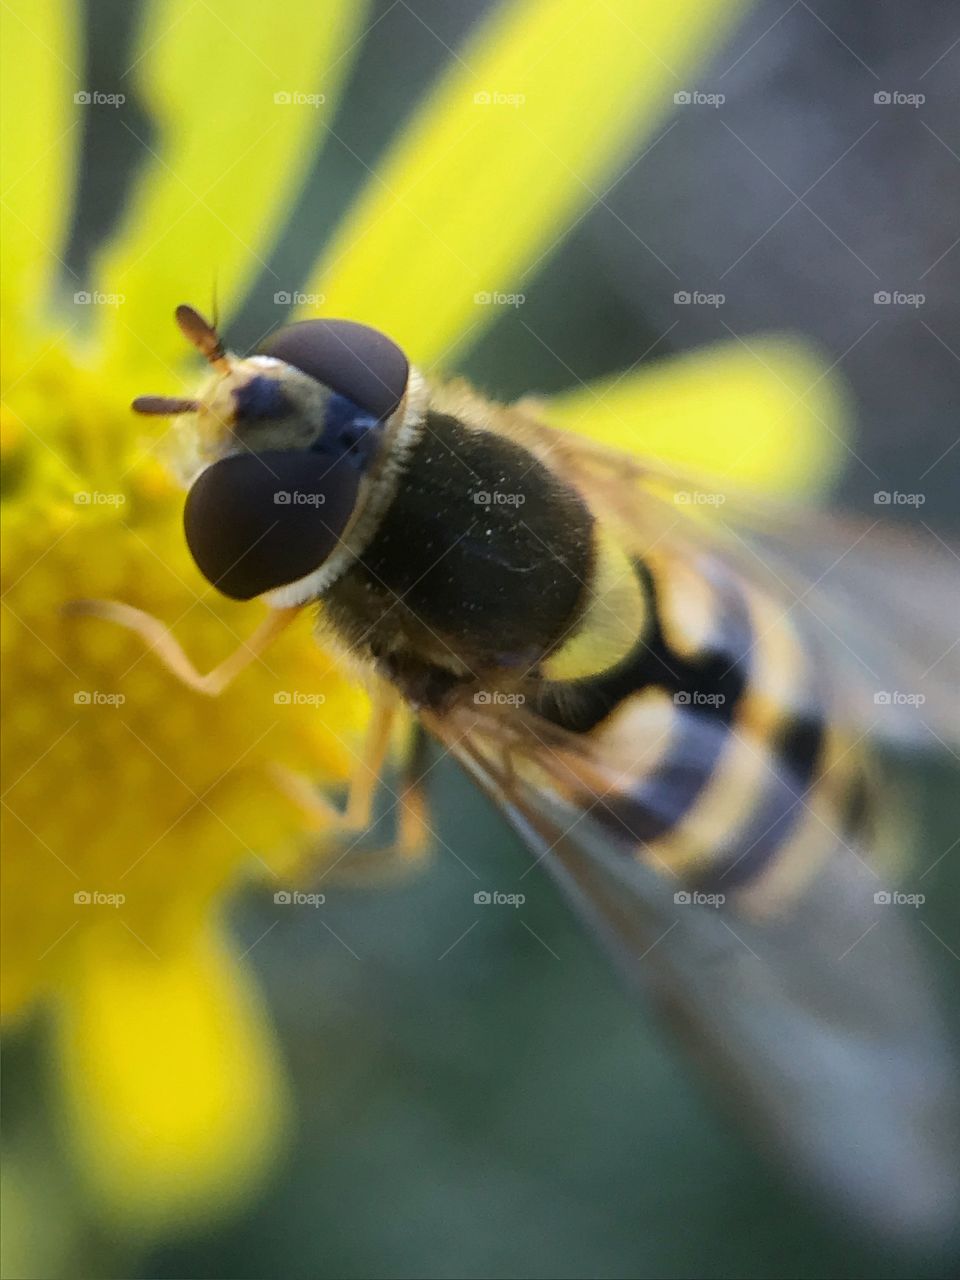 A nice bee | Photo with iPhone 7 + Macro lens. 🇫🇷